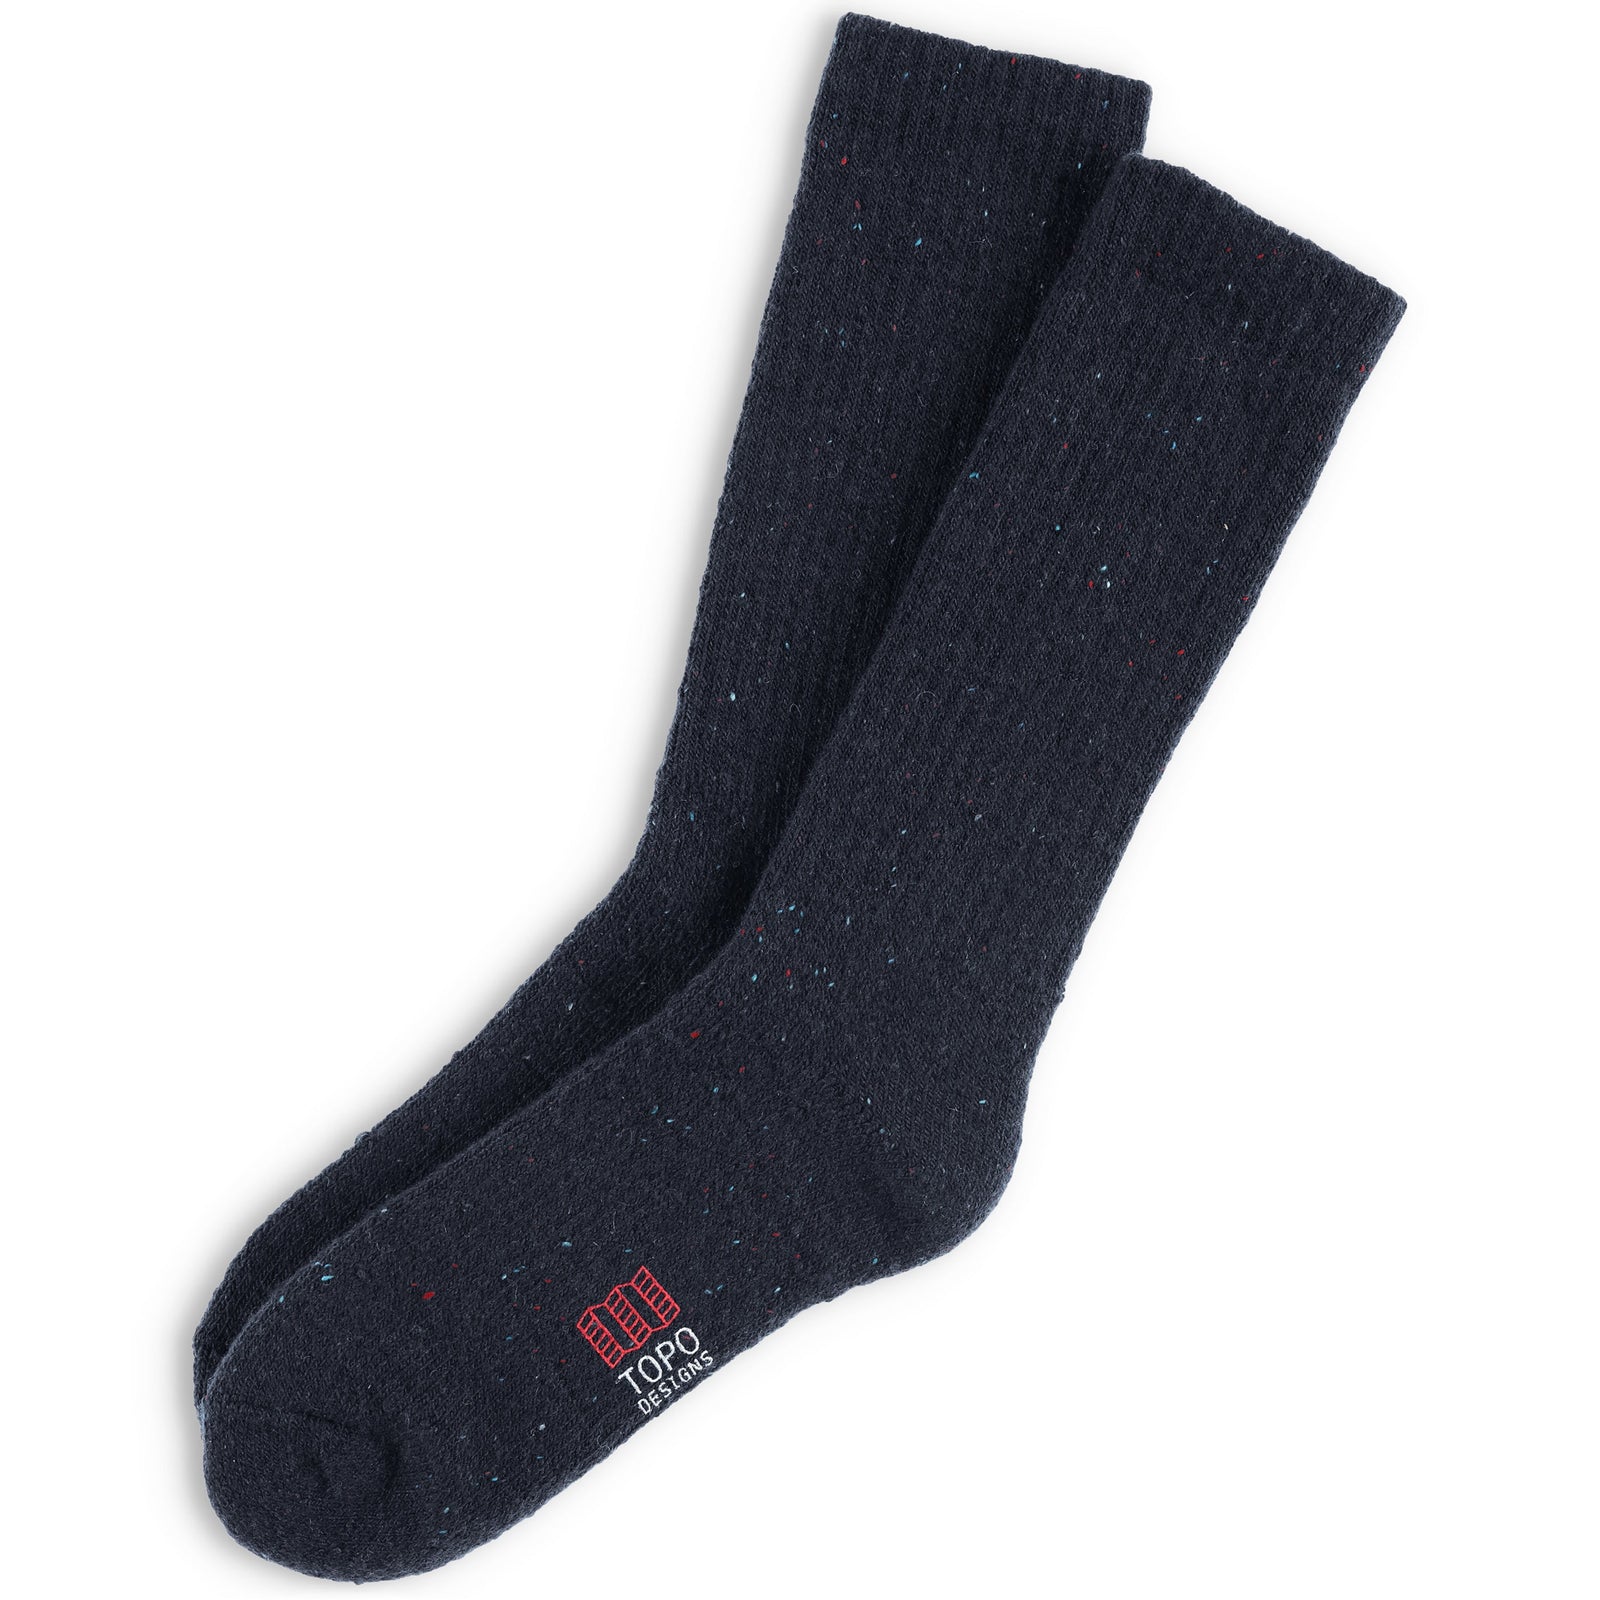 Topo Designs Mountain Socks in "Charcoal" gray.